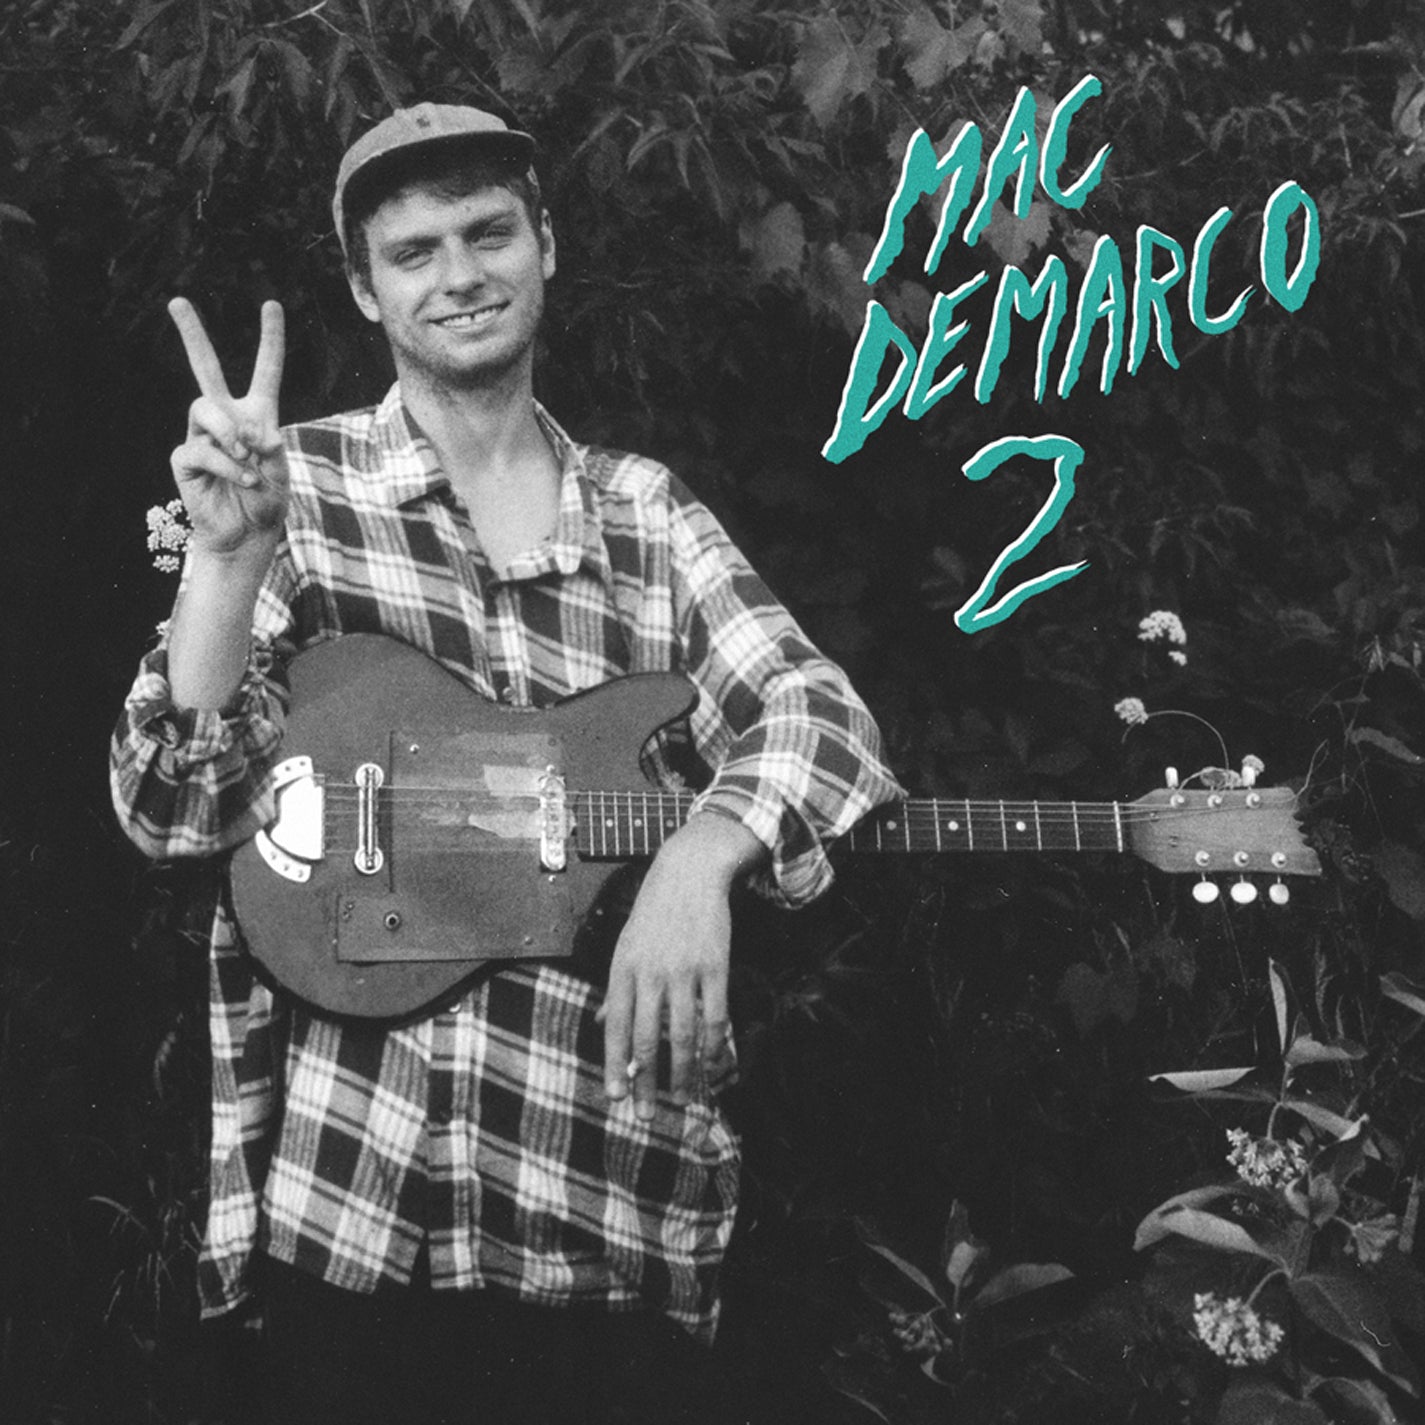 Mac DeMarco - 2 [10 Year Anniversary edition 2 LP]